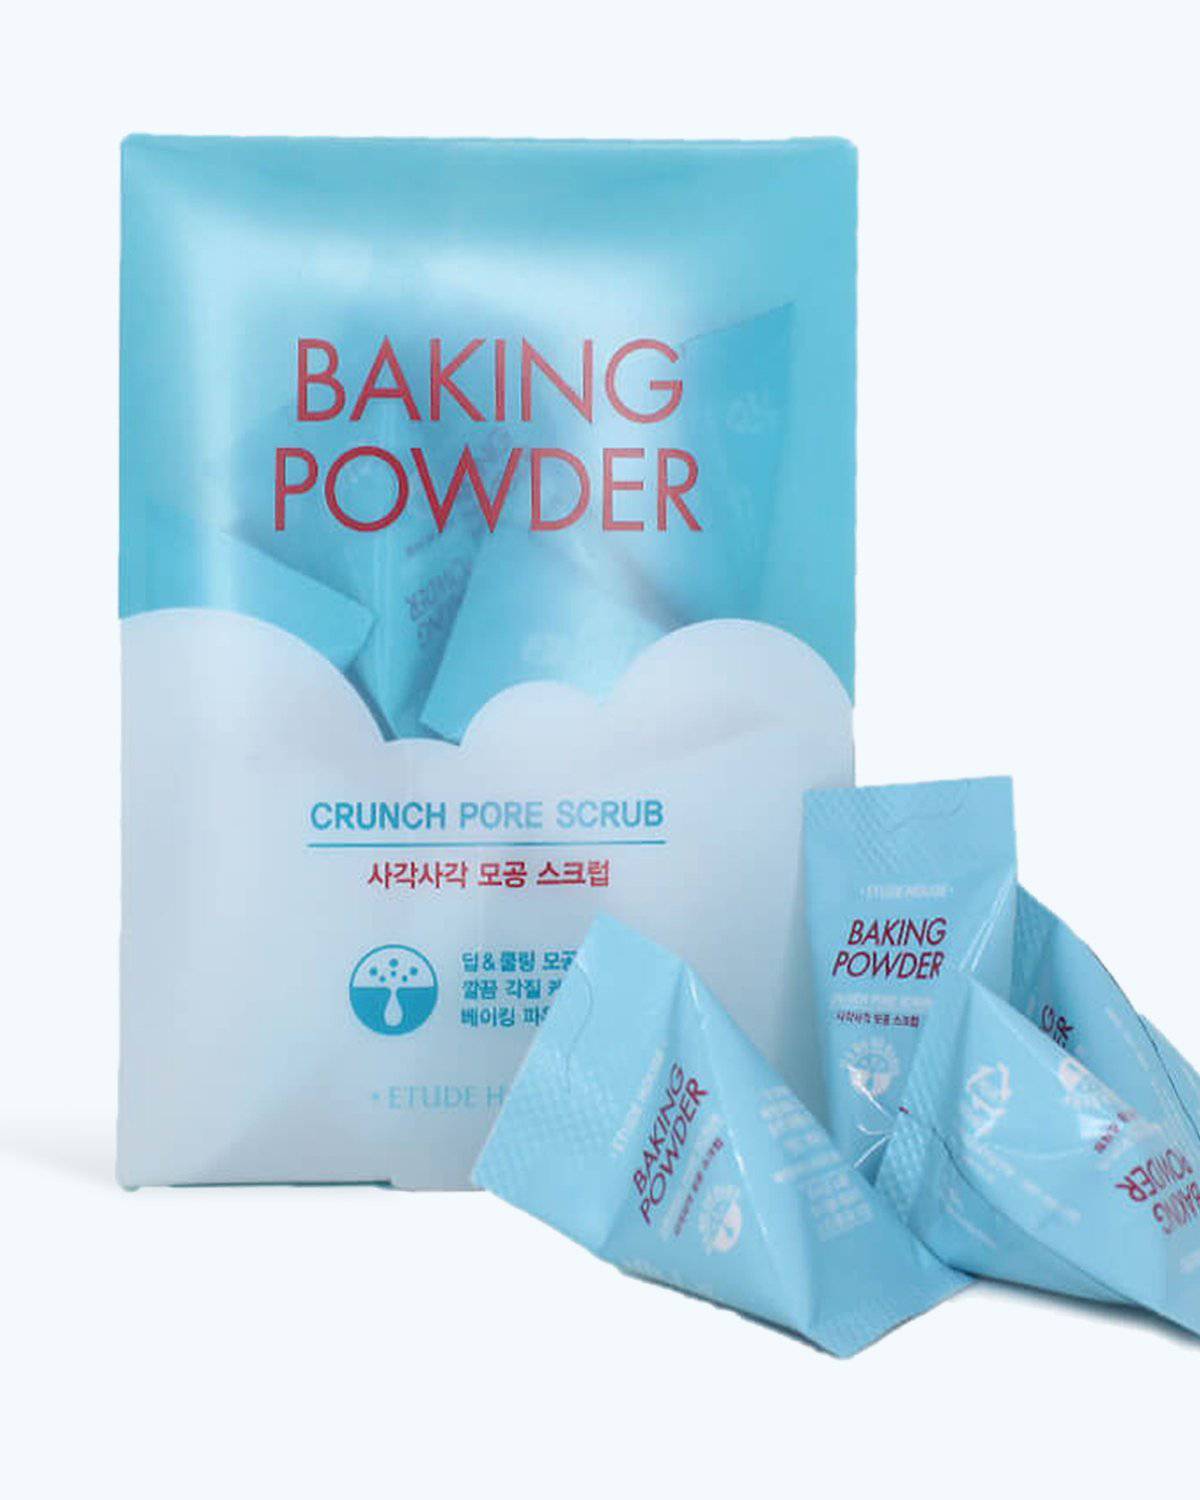 Baking powder скраб применение